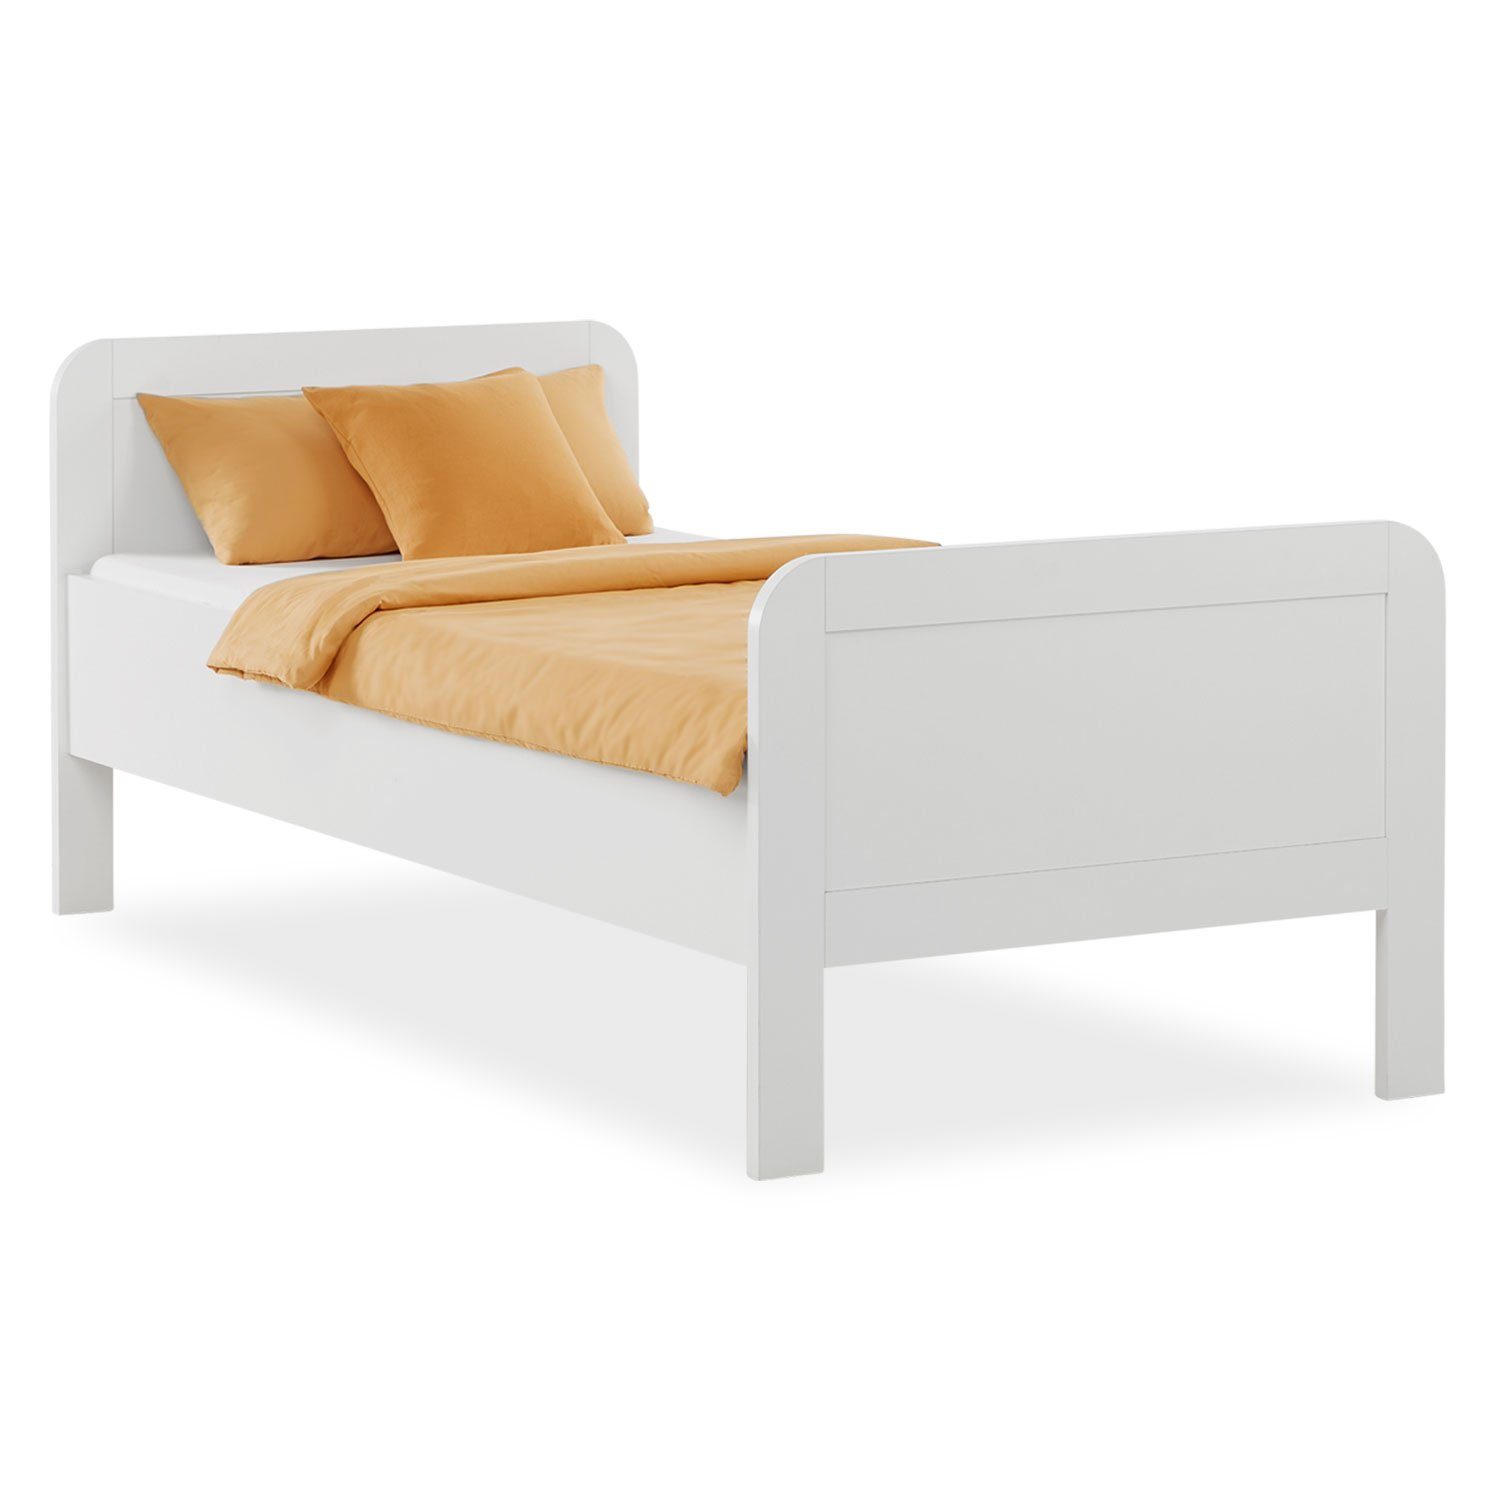 Homestyle4u Holzbett Komfortbett 90x200 cm Natur Weiß Bett